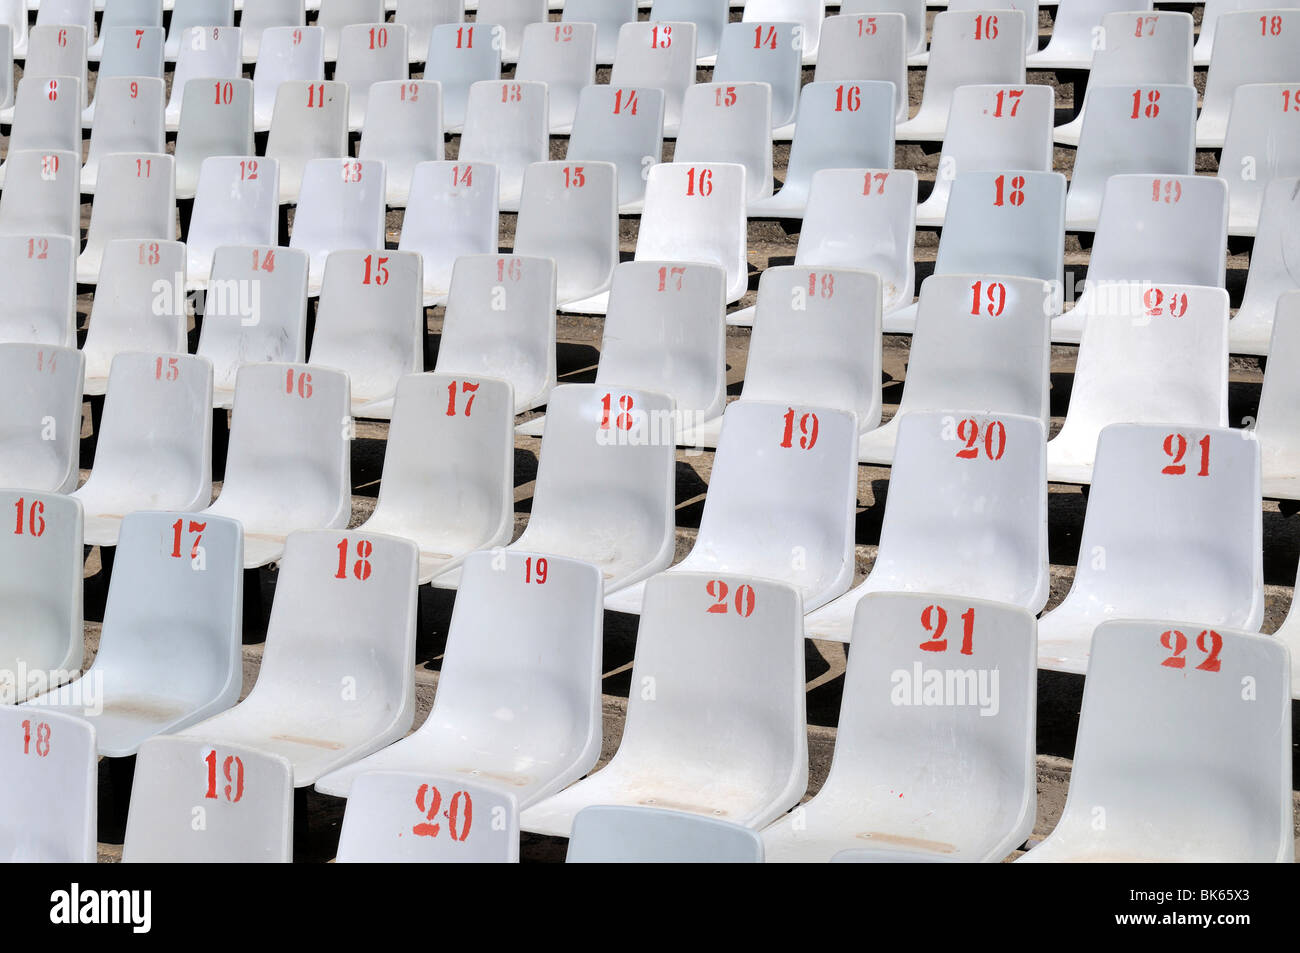 2010 FIFA World Cup, empty spectator seats, Loftus Versfeld Stadium, Pretoria, South Africa, Africa Stock Photo